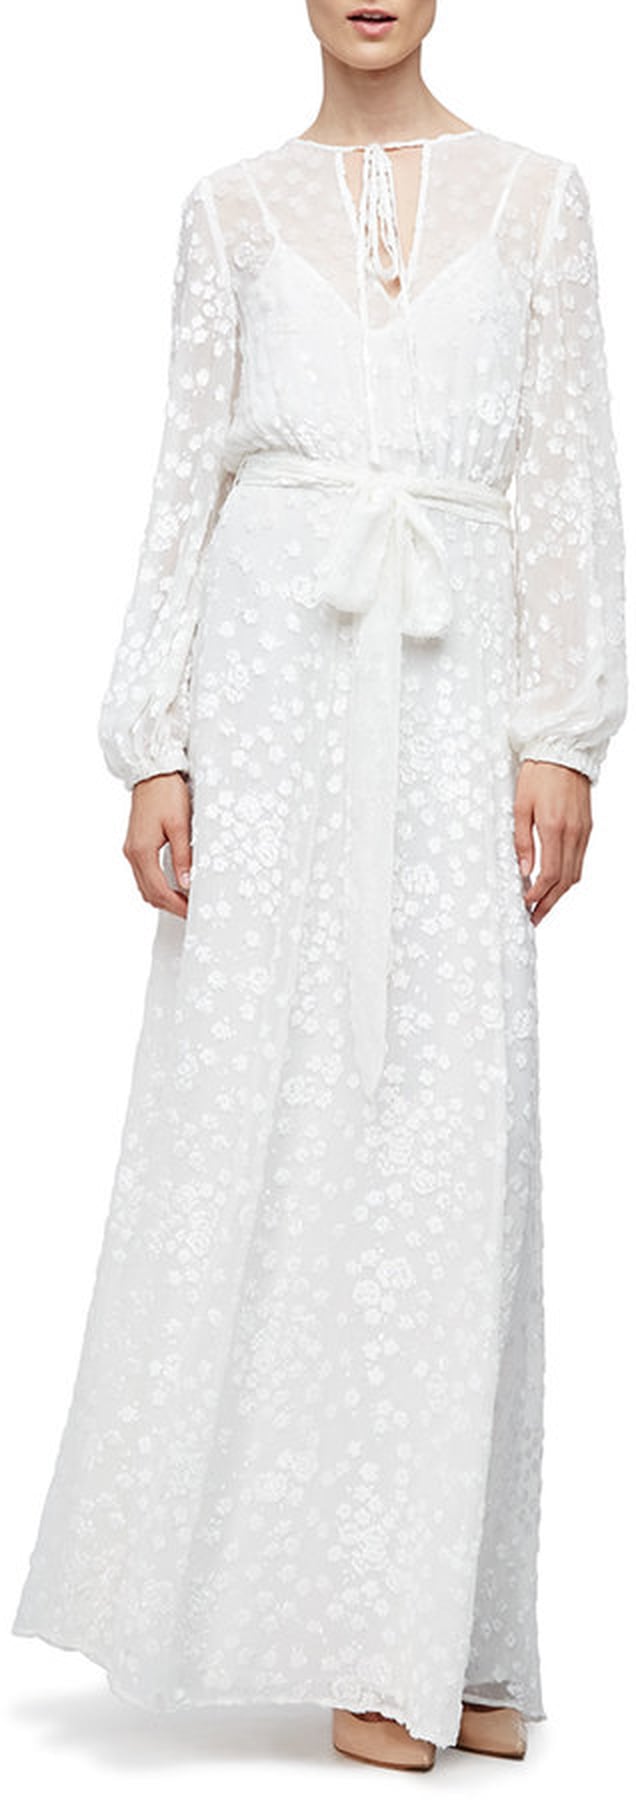 Cardi B SNL White Dress 2018 | POPSUGAR Fashion